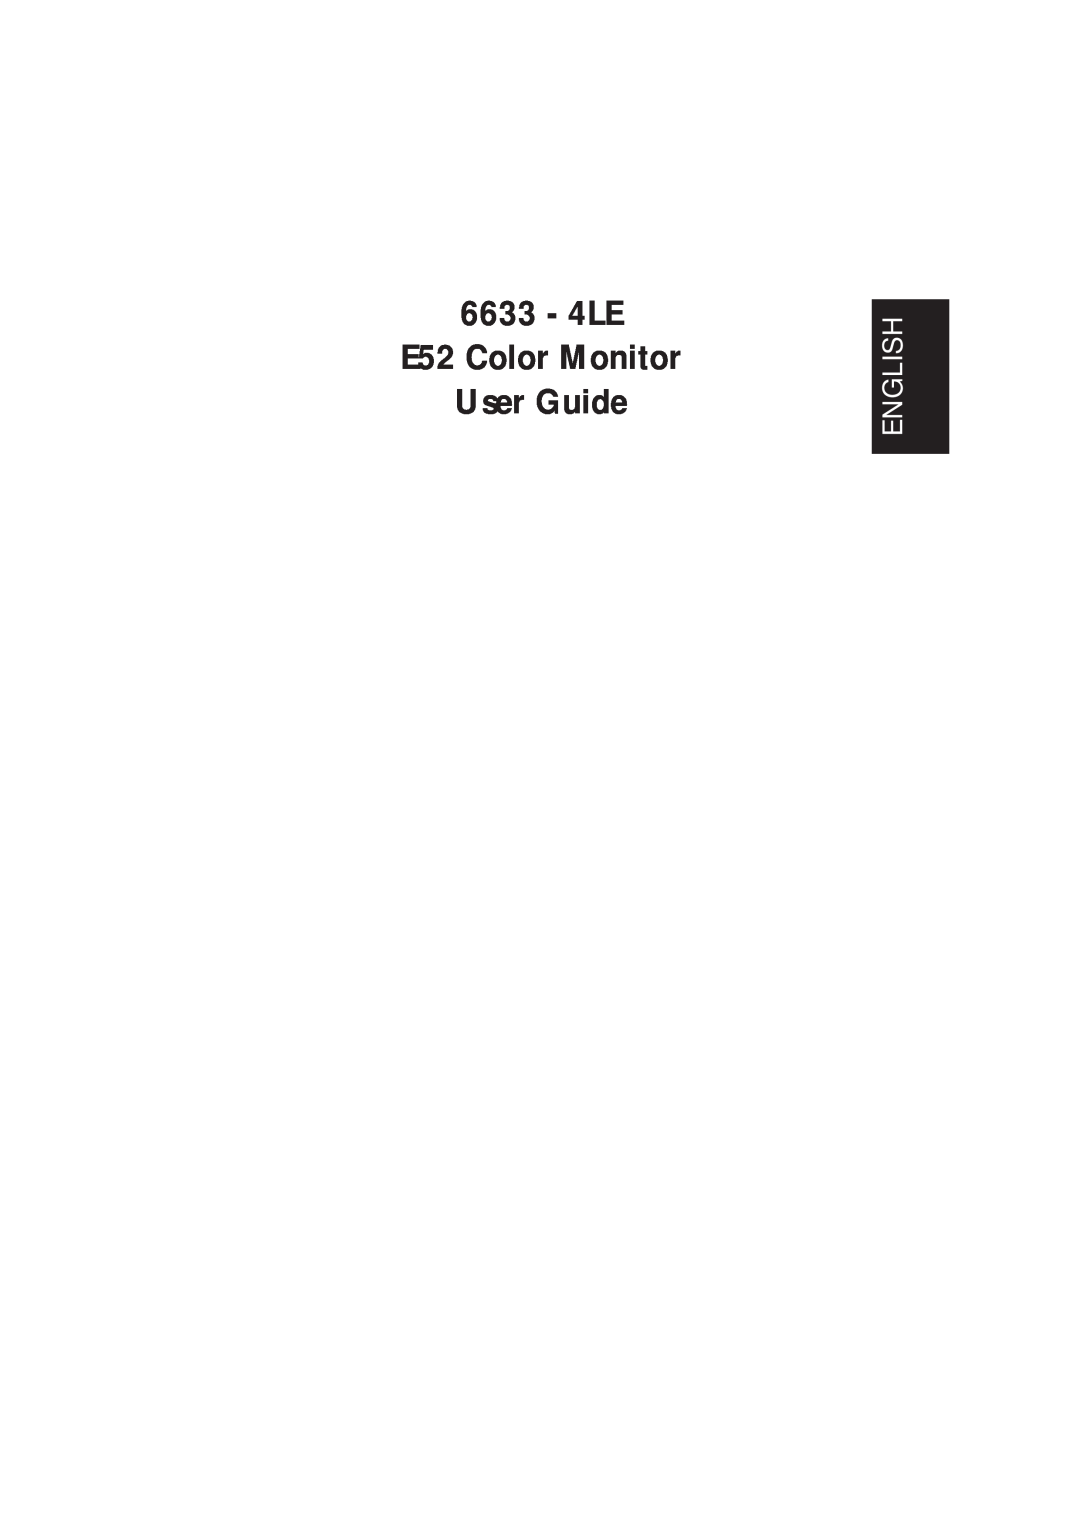 IBM manual 6633 - 4LE E52 Color Monitor User Guide, English 